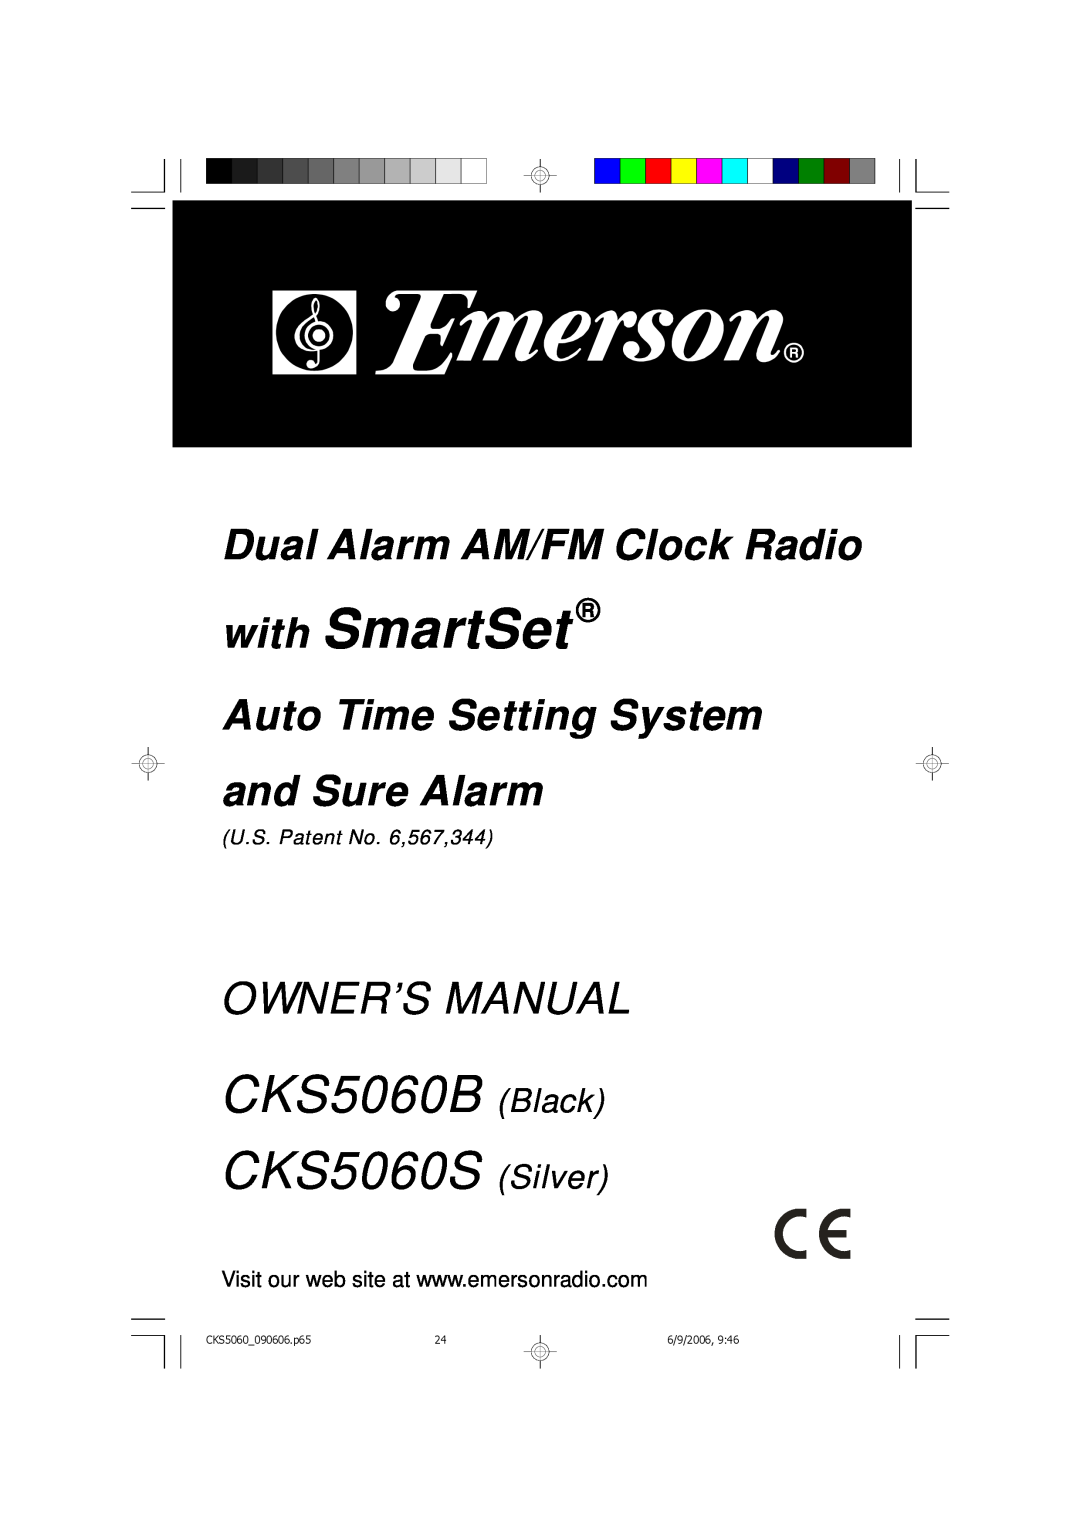 Emerson owner manual with SmartSet, CKS5060B CKS5060S, Owner’S Manual, Dual Alarm AM/FM Clock Radio, Black Silver 